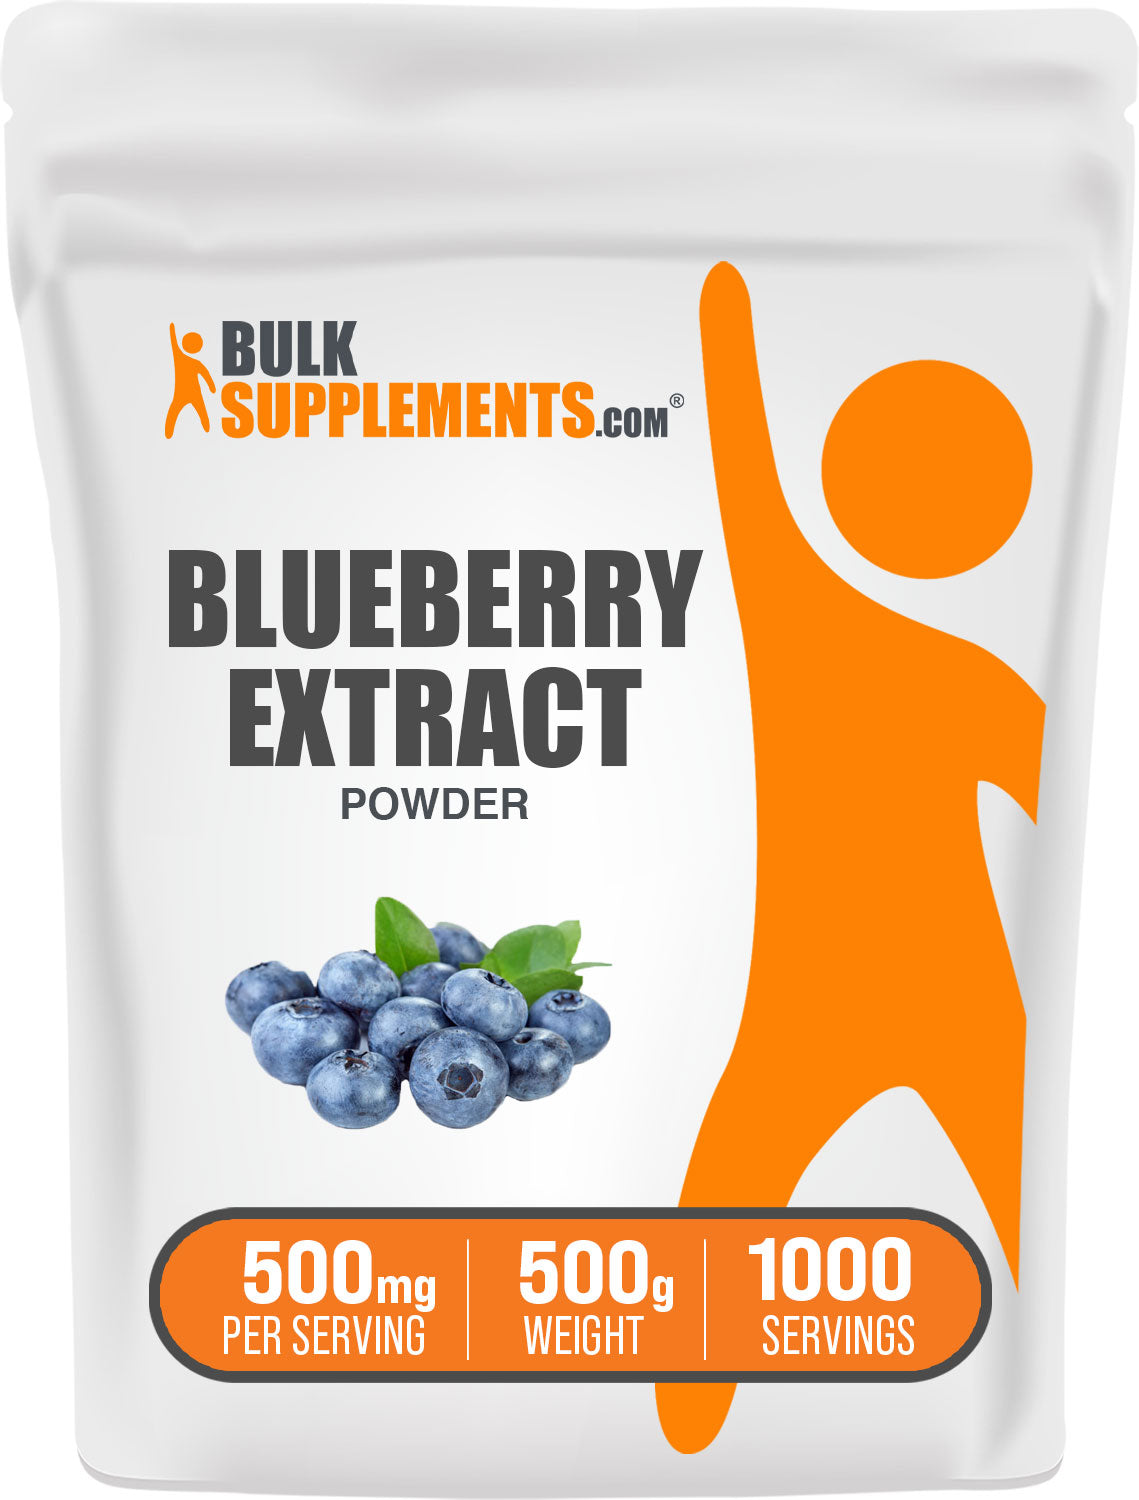 500g of blueberry powder